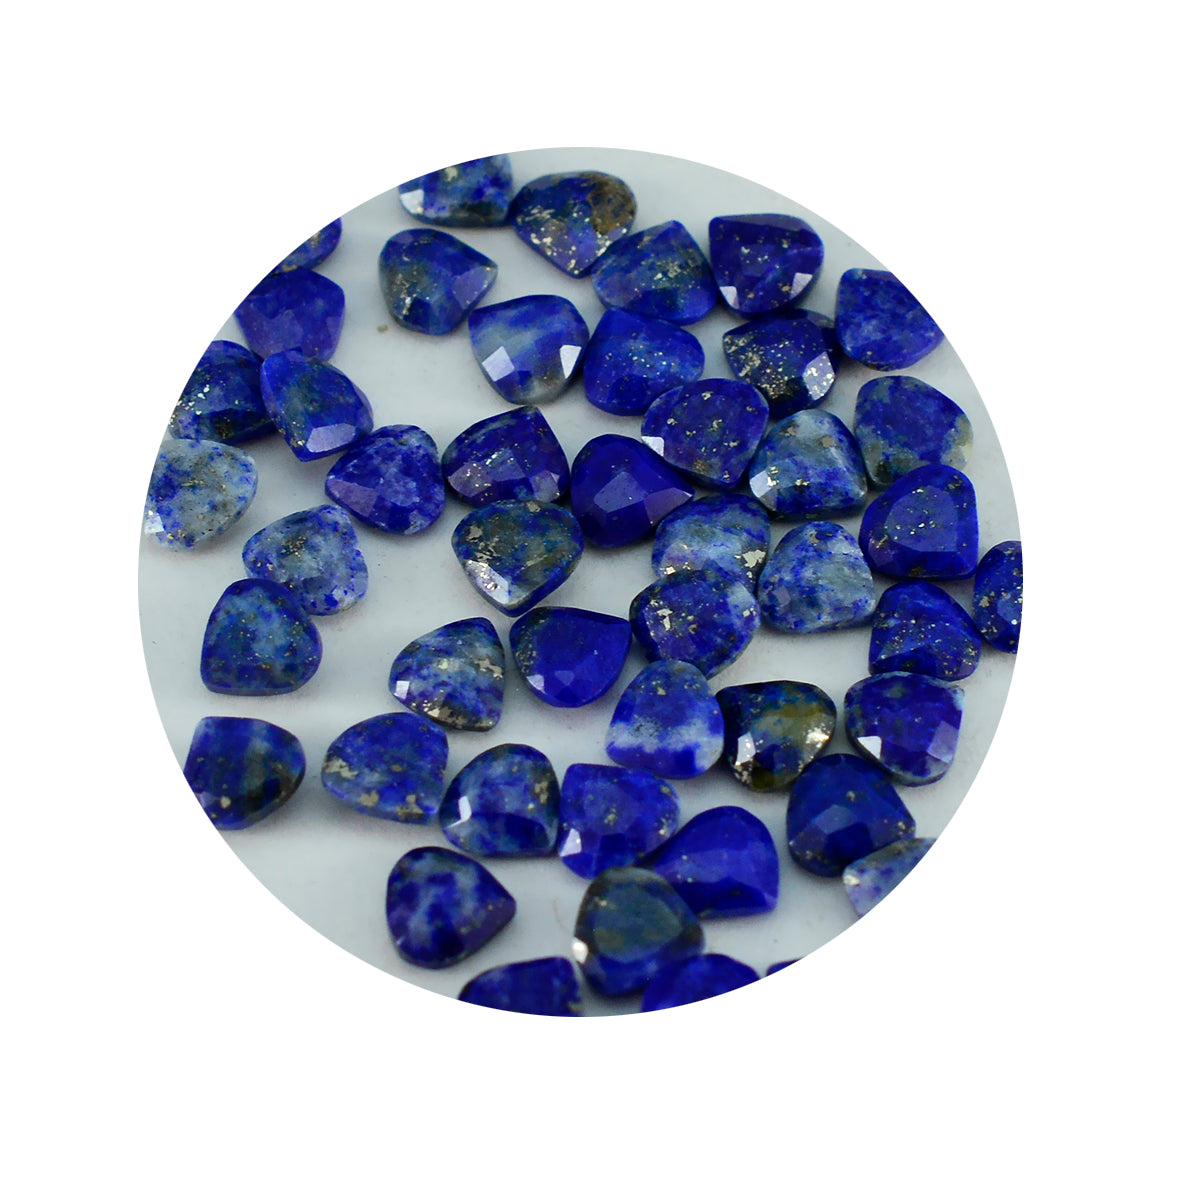 Riyogems 1PC Genuine Blue Lapis Lazuli Faceted 5x5 mm Heart Shape handsome Quality Gemstone